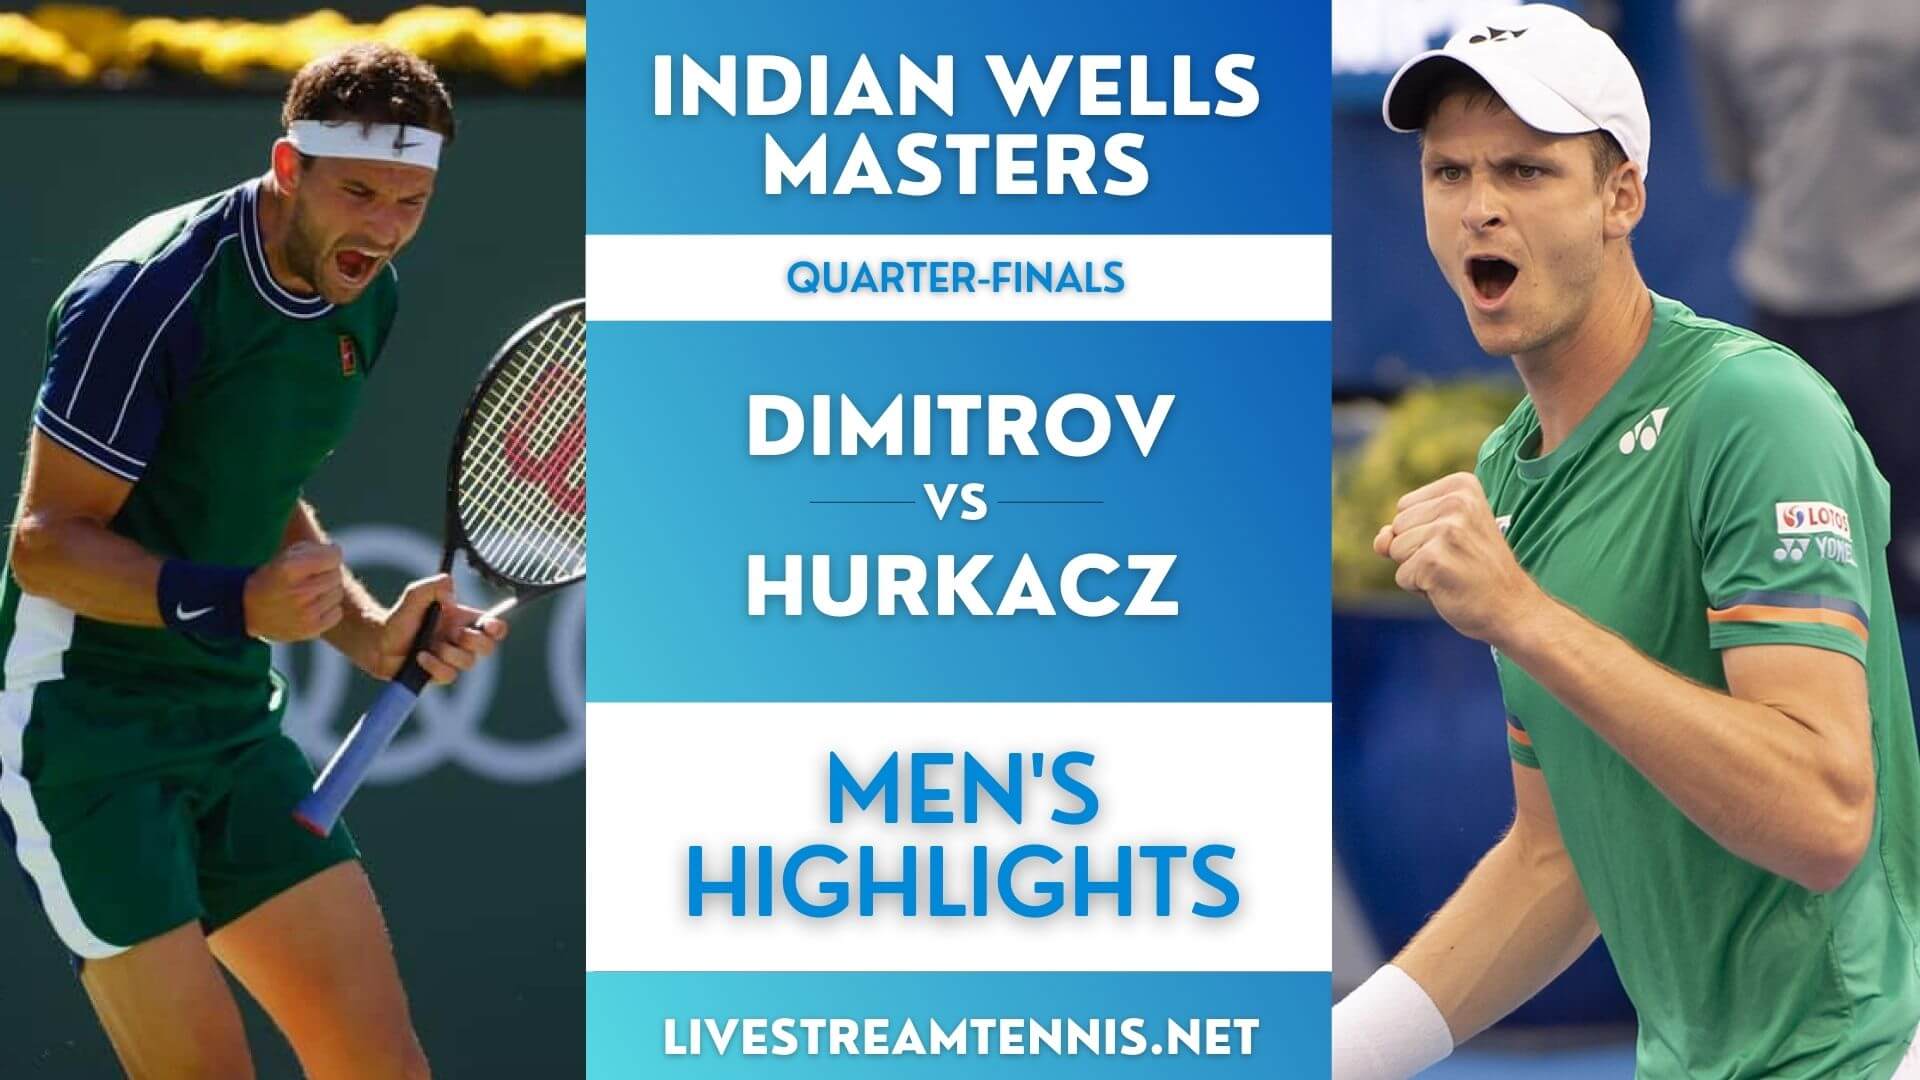 Indian Wells Masters Men Quarter Final 2 Highlights 2021